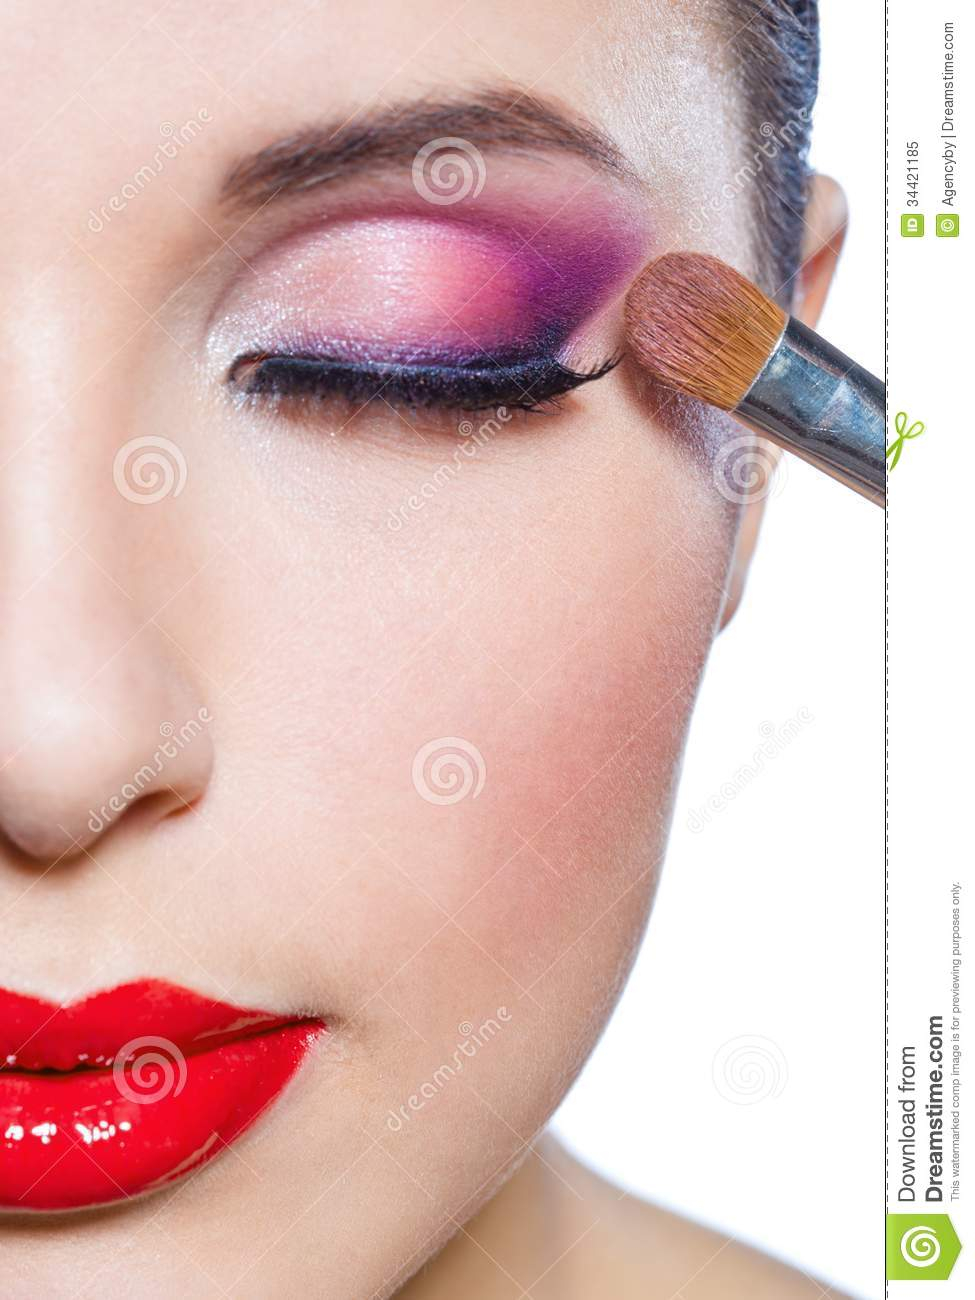 Half Eye Makeup Close Up Of Half Face Of Girl Applying Makeup Stock Image Image Of